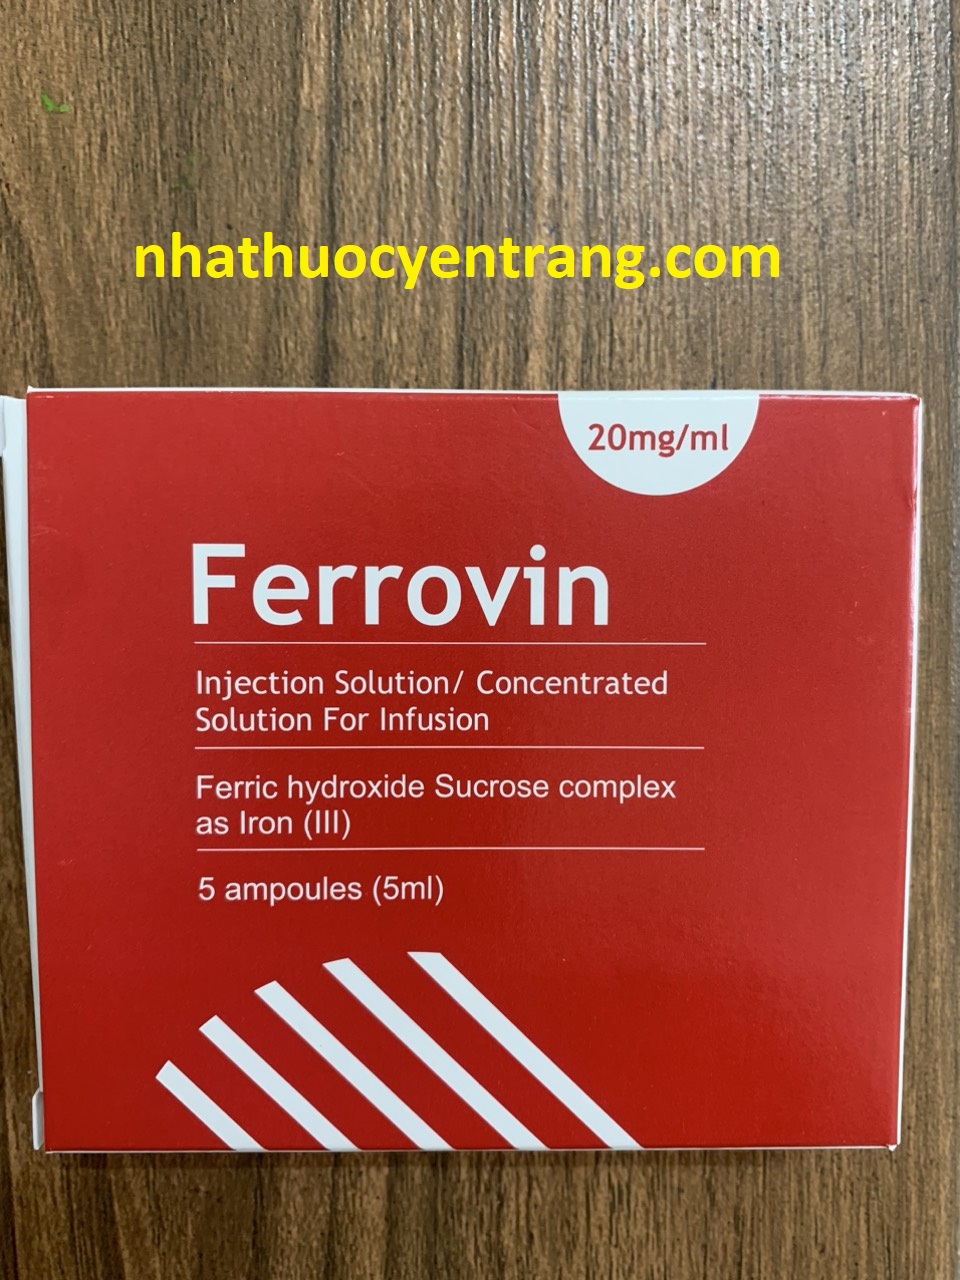 Ferrovin 20mg/ml